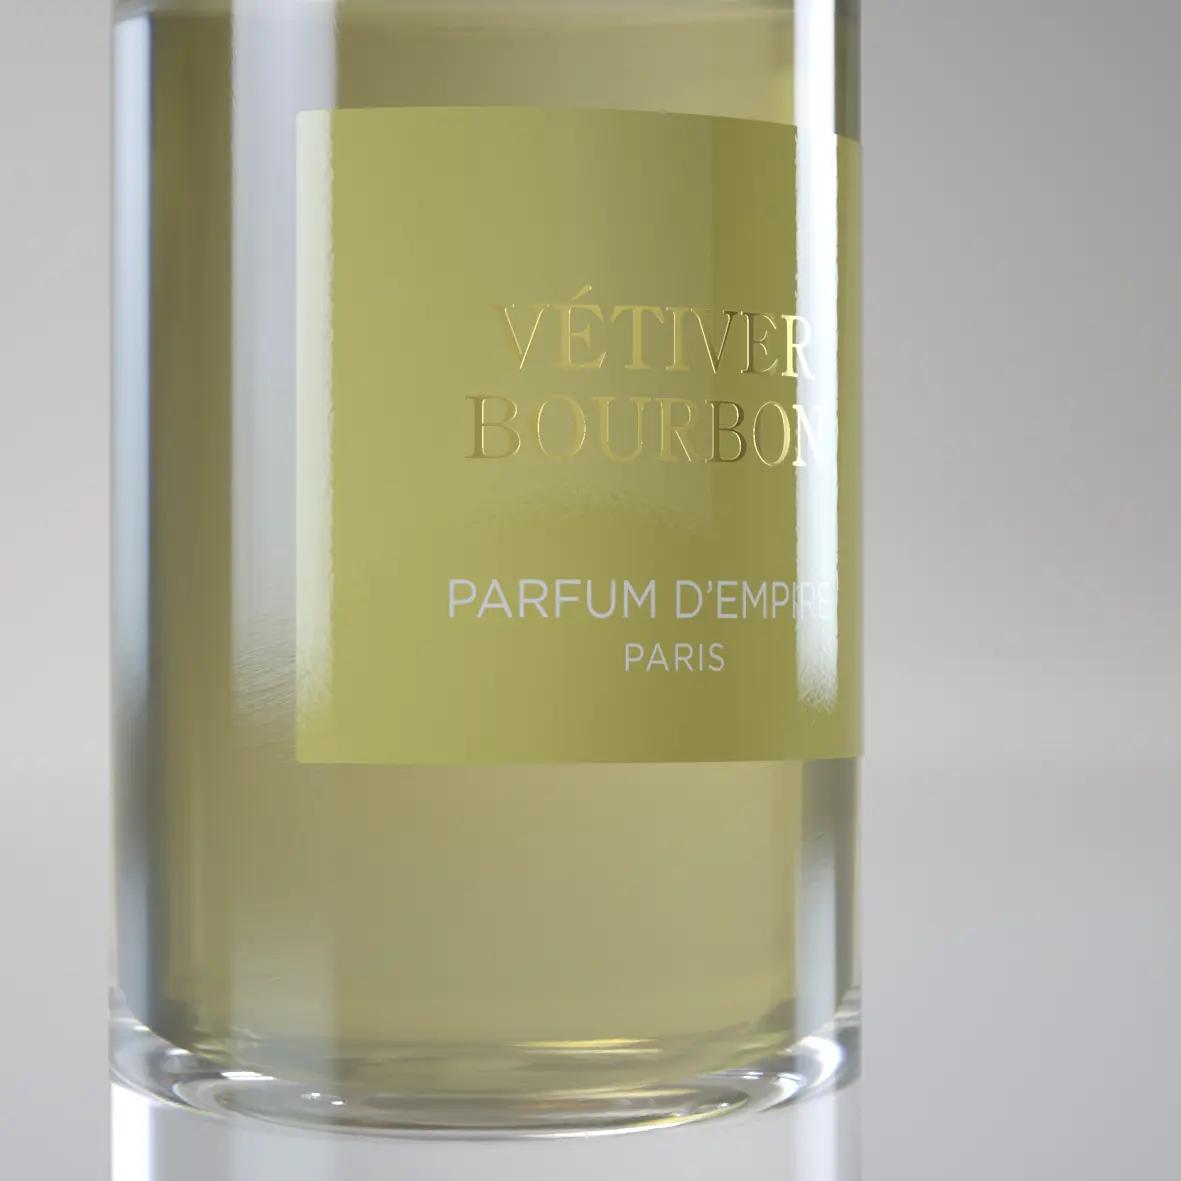 Parfum d'Emipre - Vetiver Bourbon | Perfume Lounge